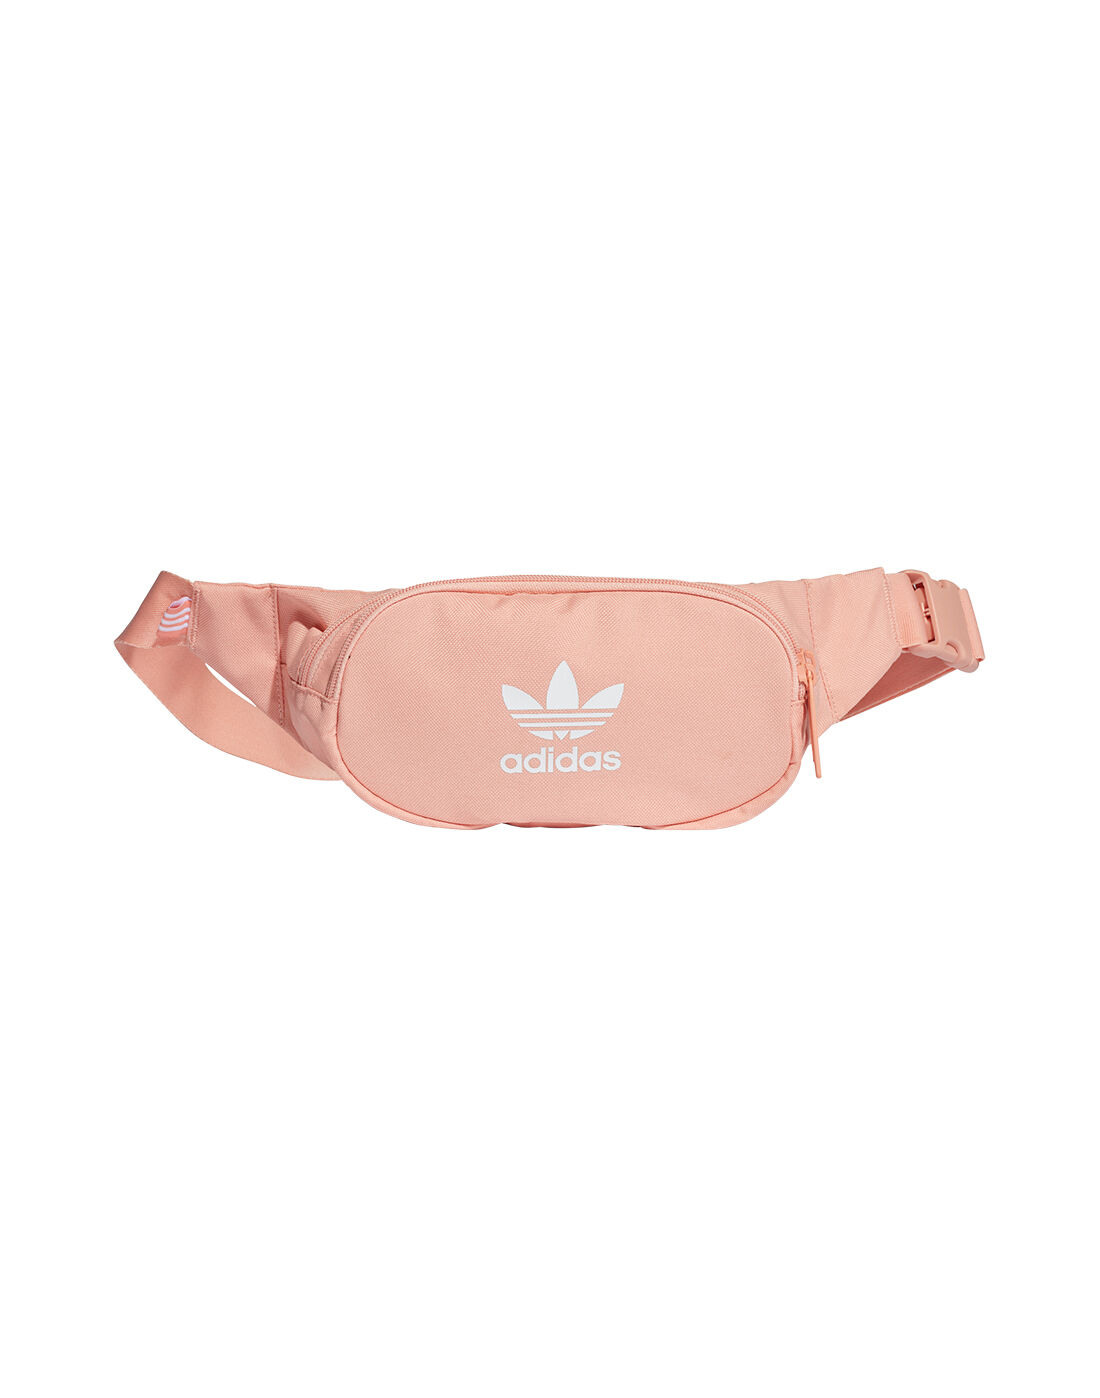 adidas belt bag pink